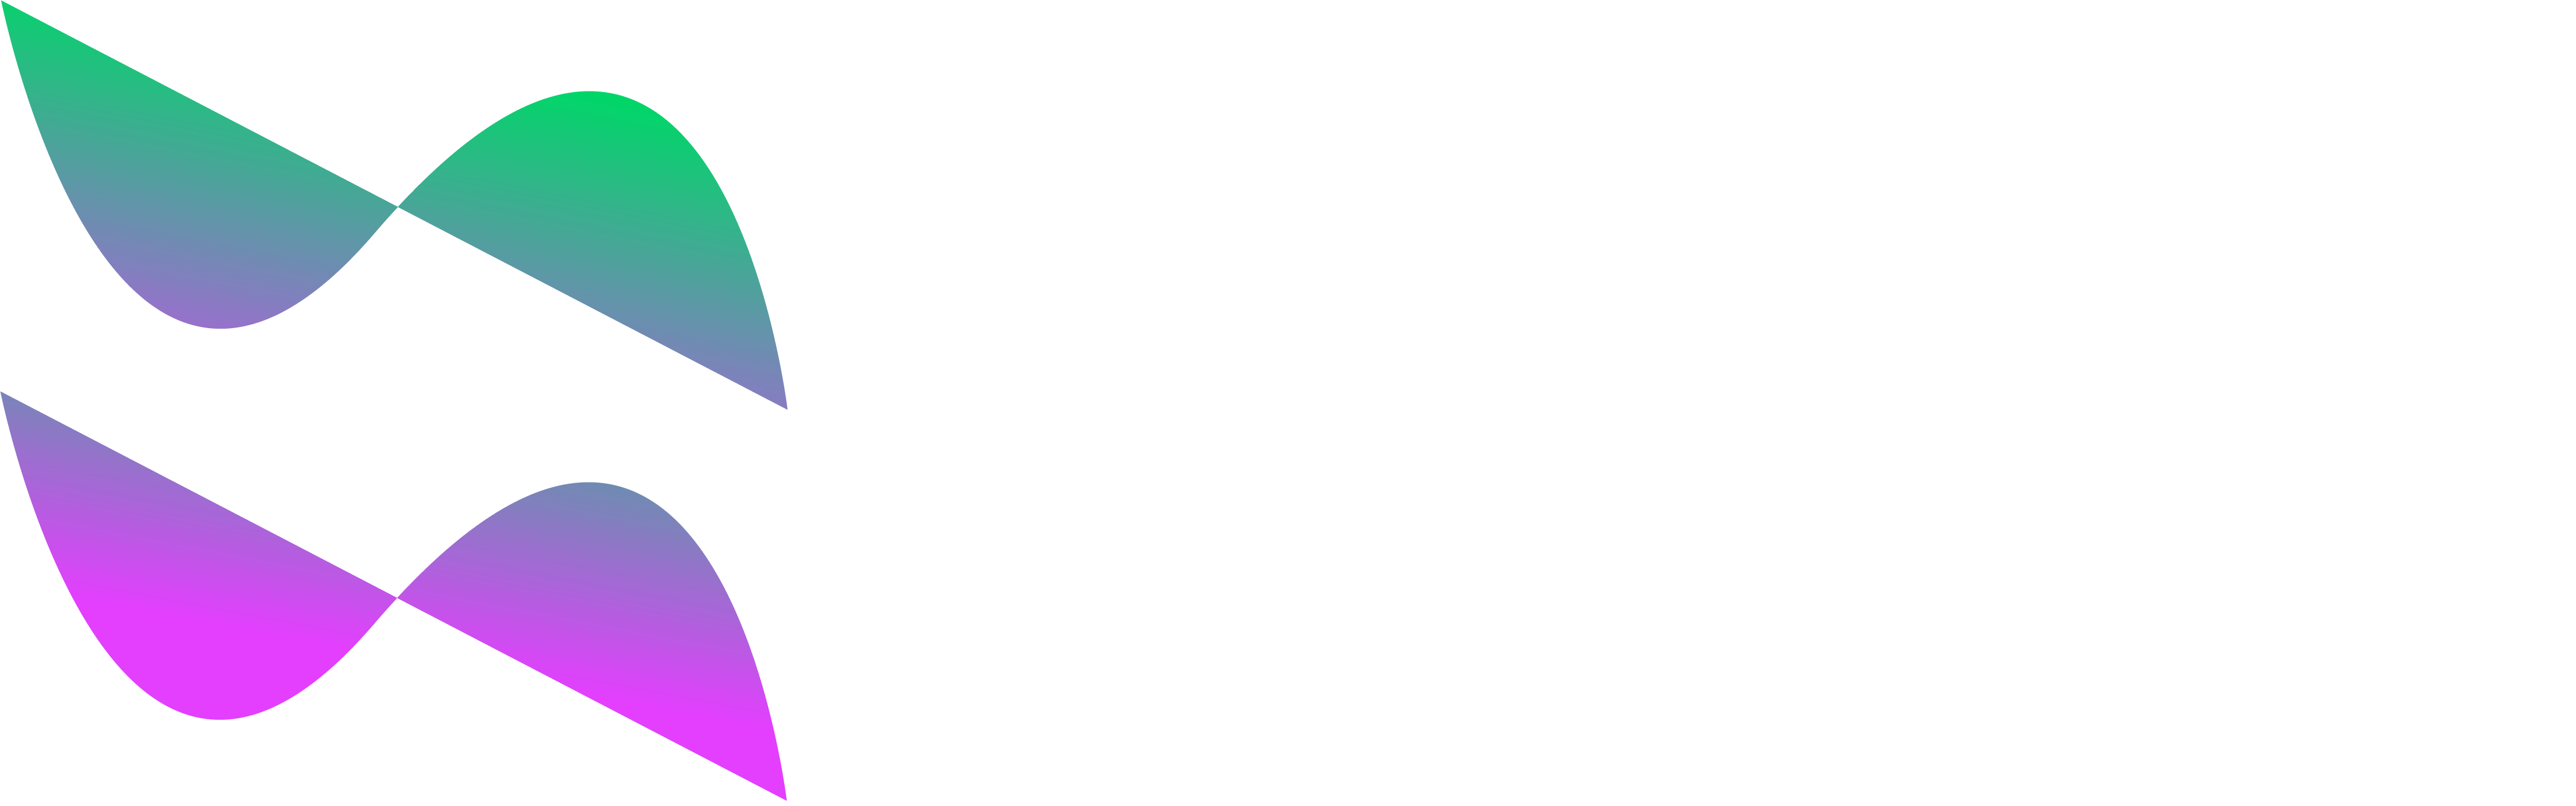 Aurora Avionics